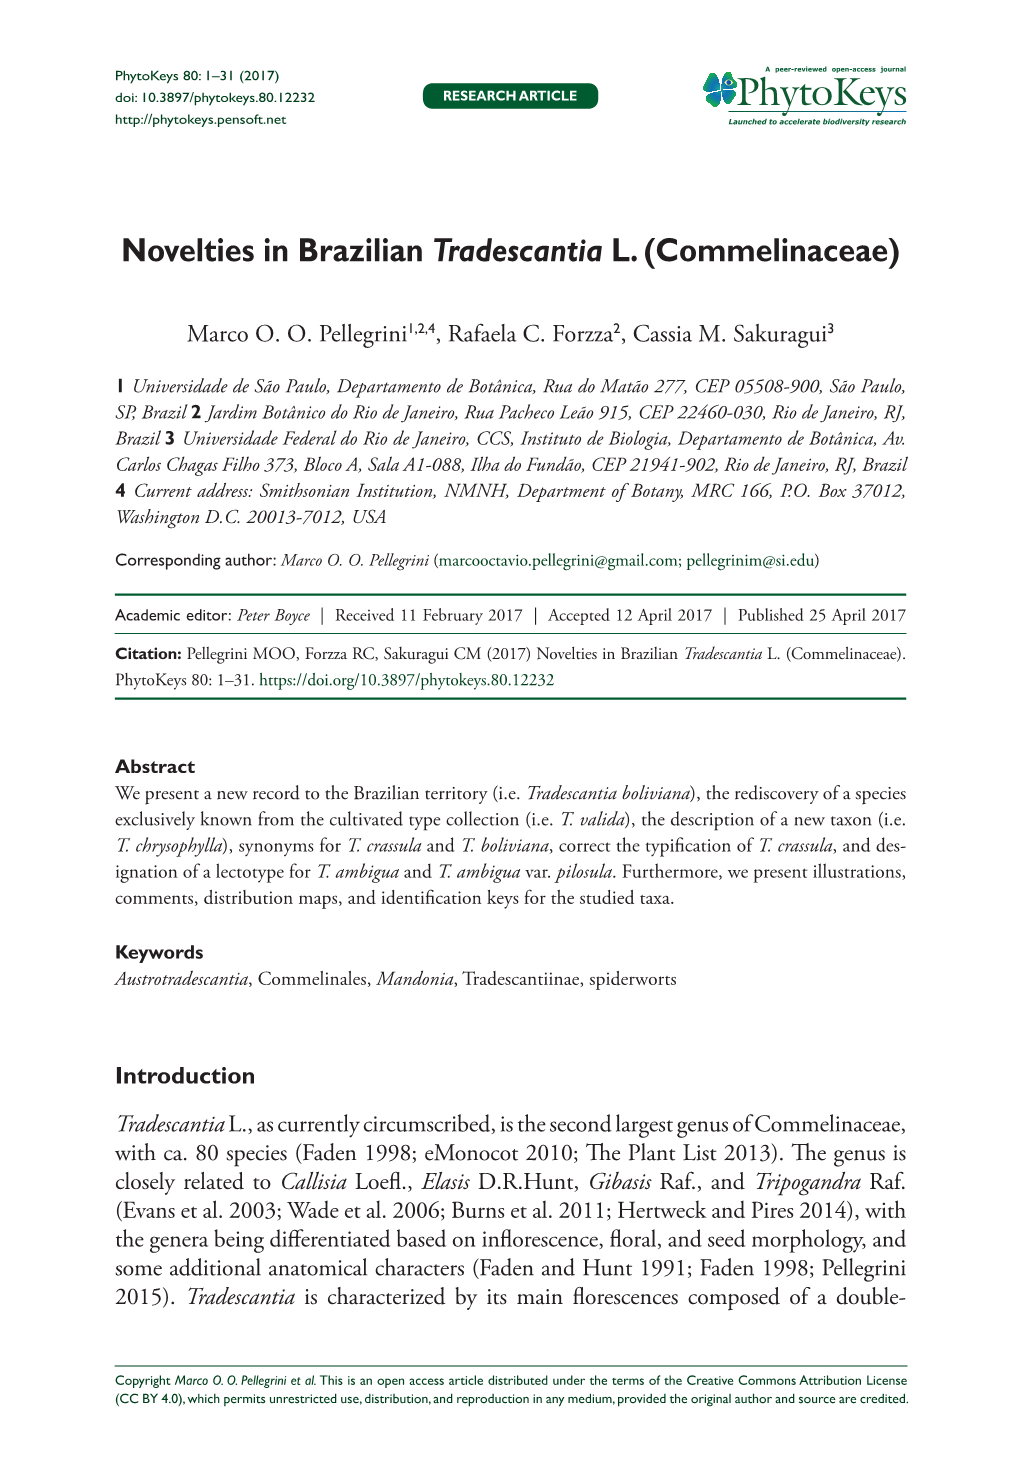 Novelties in Brazilian Tradescantia L